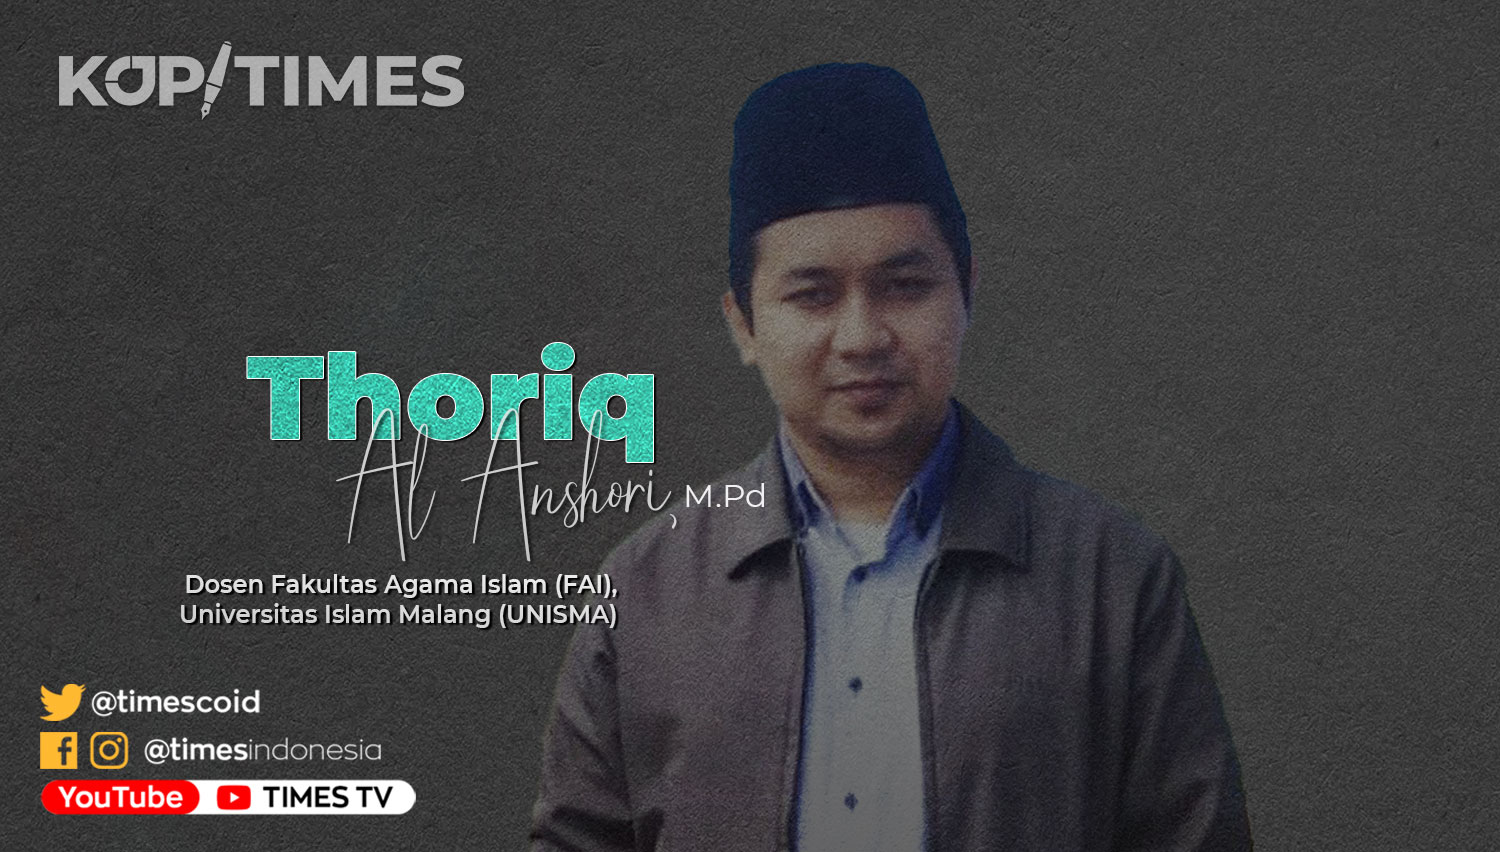 Thoriq Al Anshori, M.Pd, Dosen Fakultas Agama Islam (FAI) Universitas Islam Malang (UNISMA).